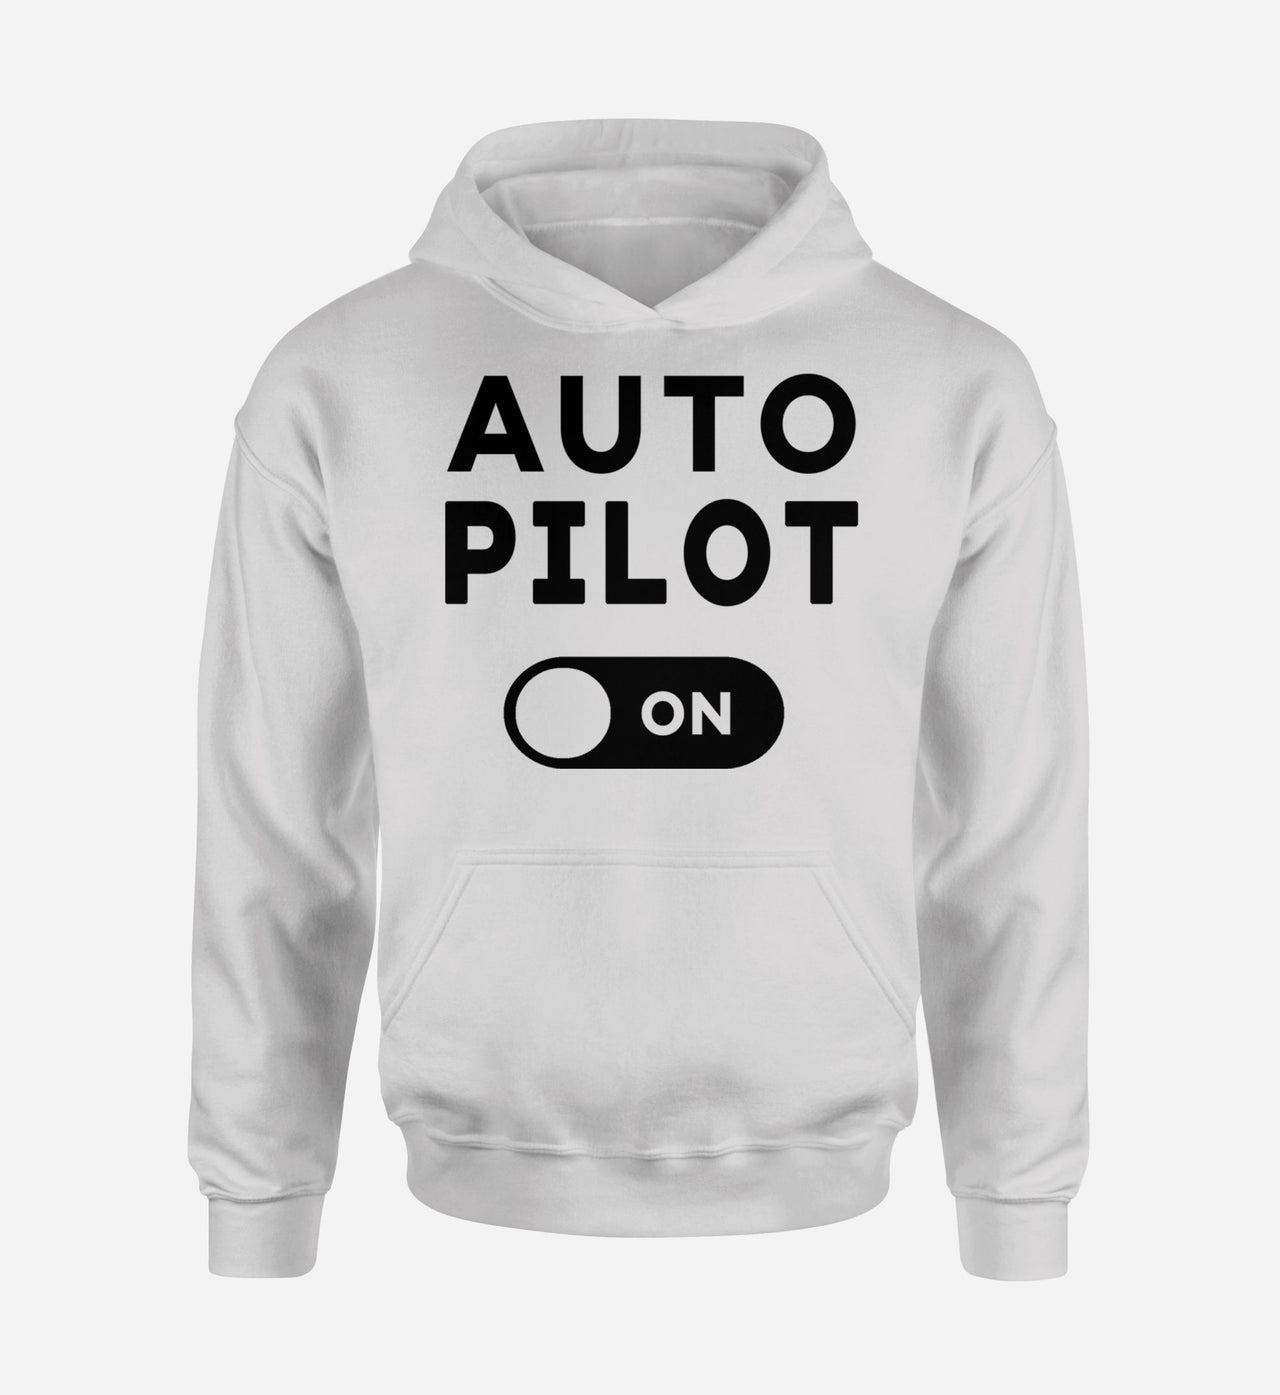 Auto Pilot ON Designed Hoodies